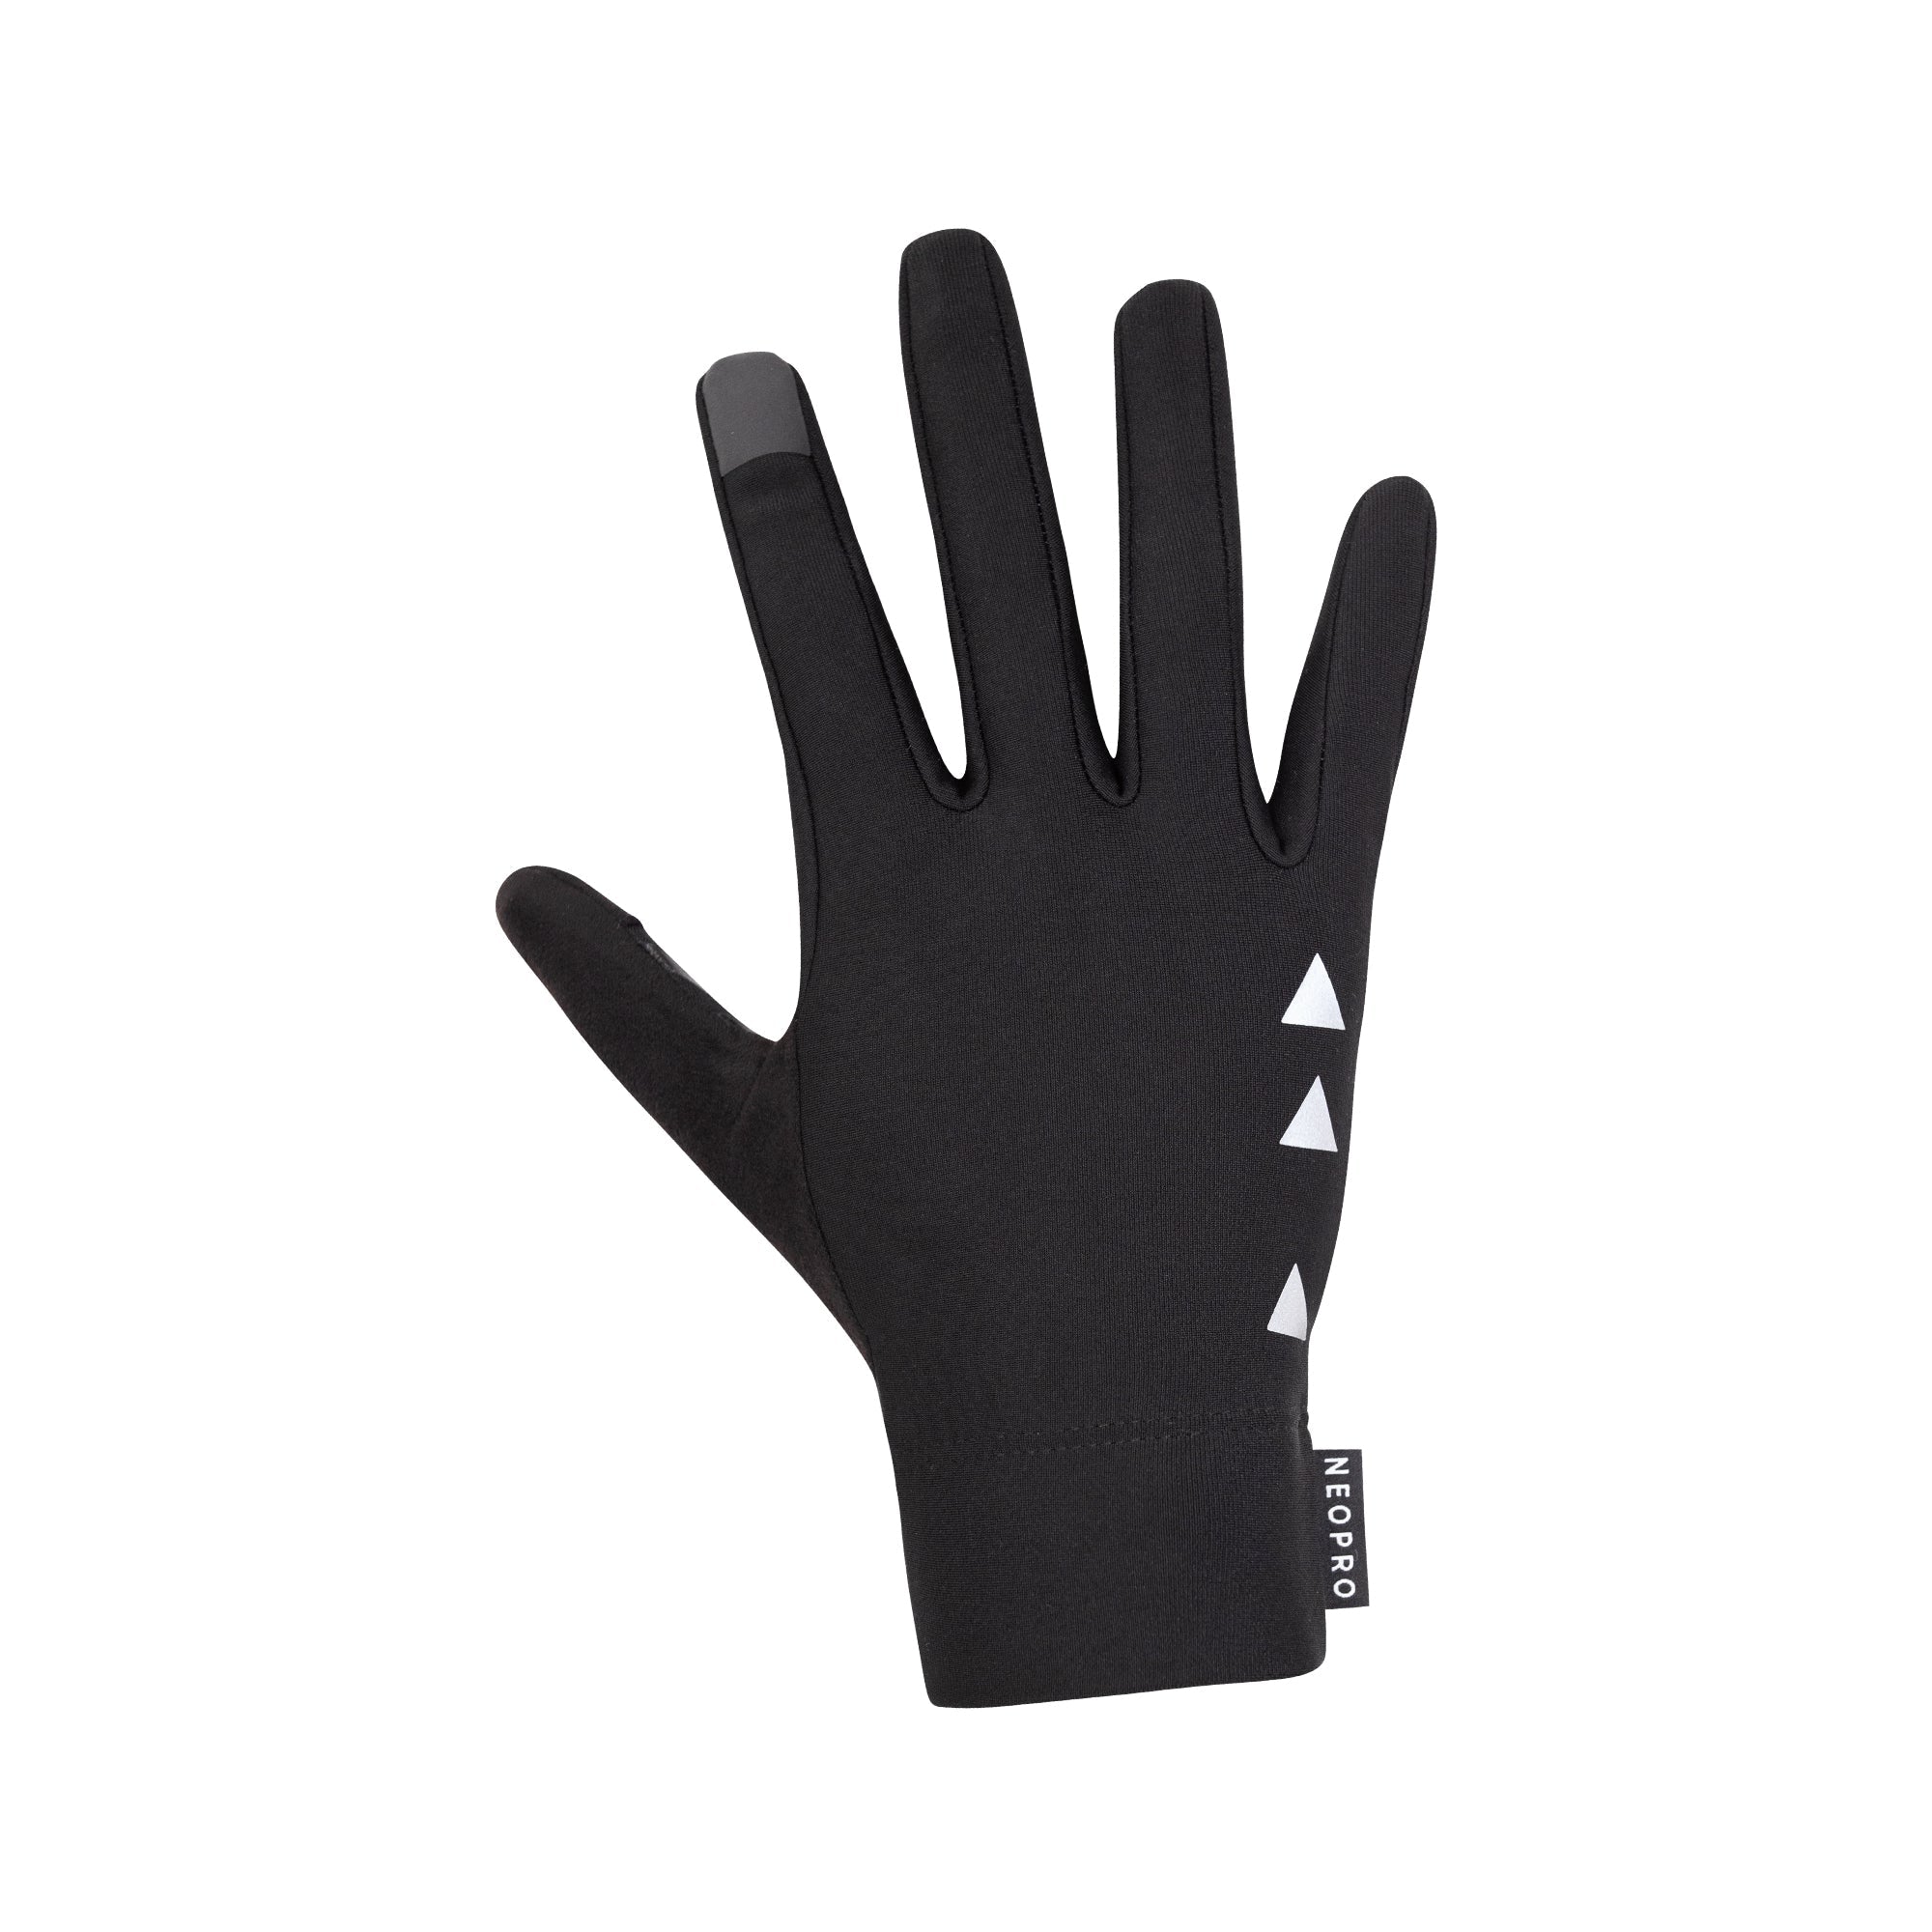 NeoPro Vanta Winter Gloves